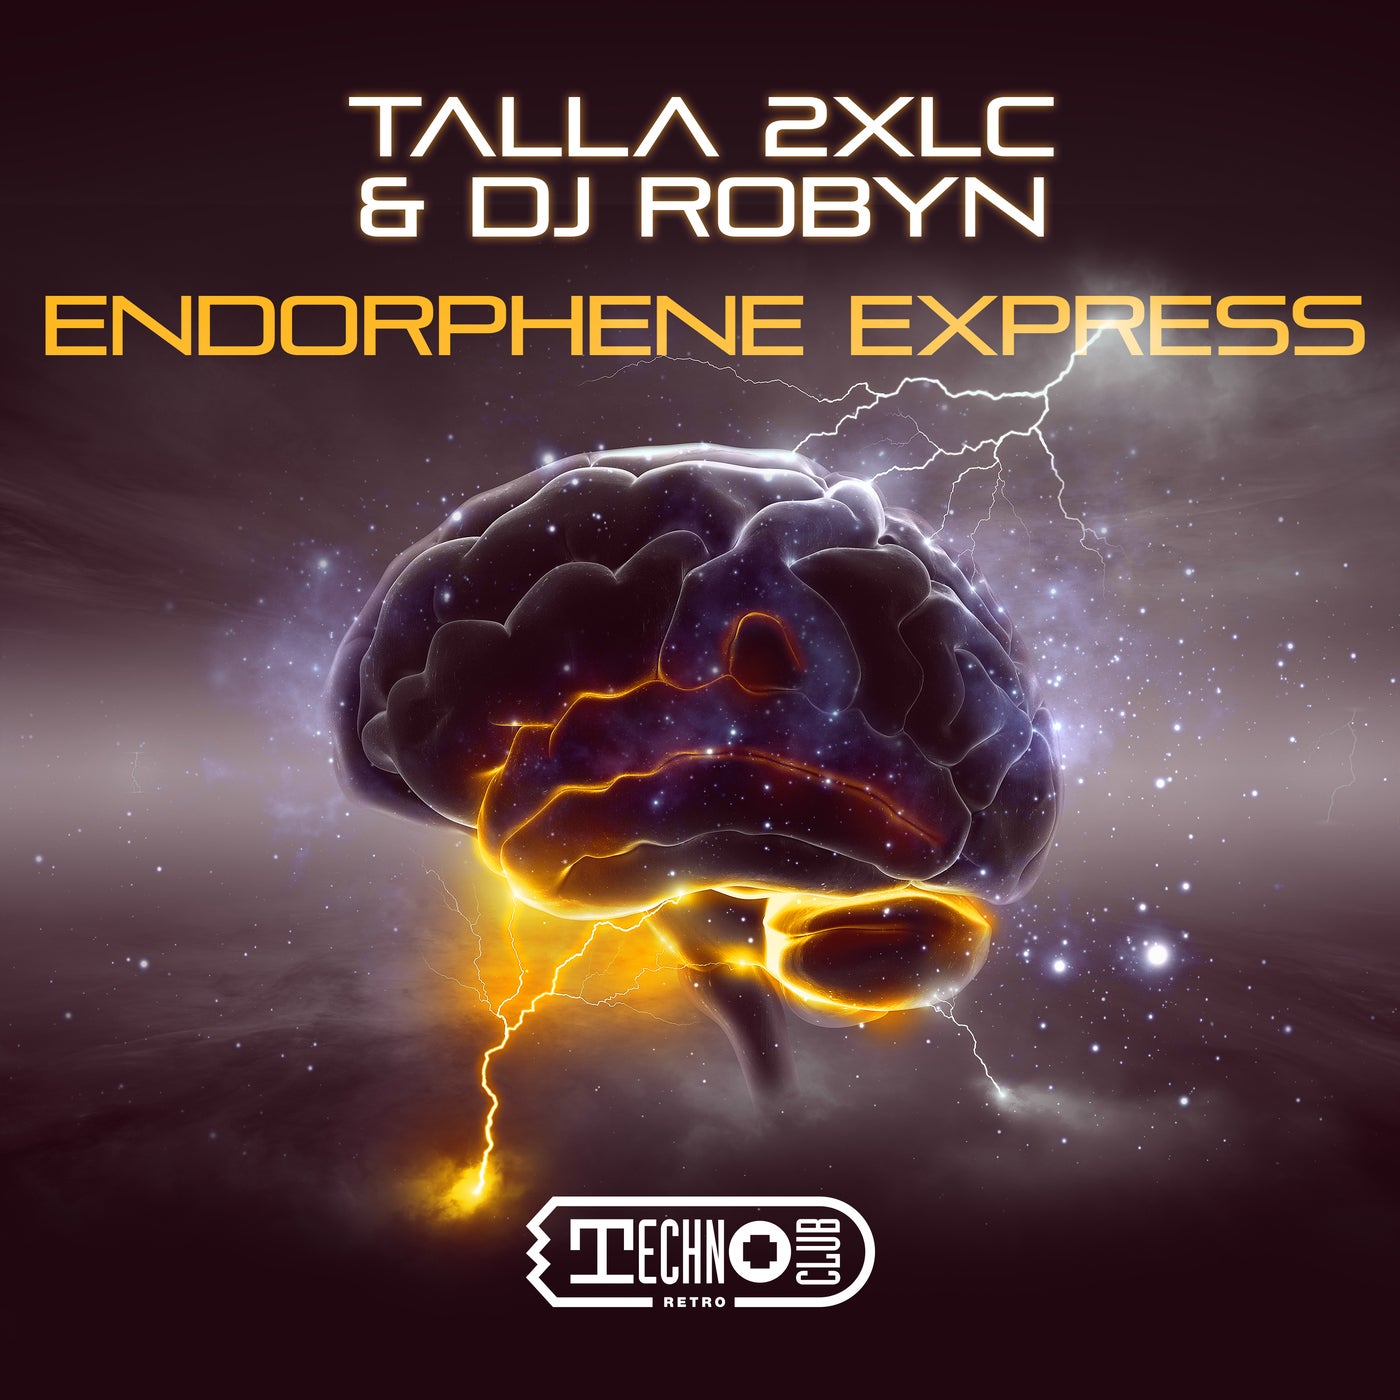 Endorphene Express